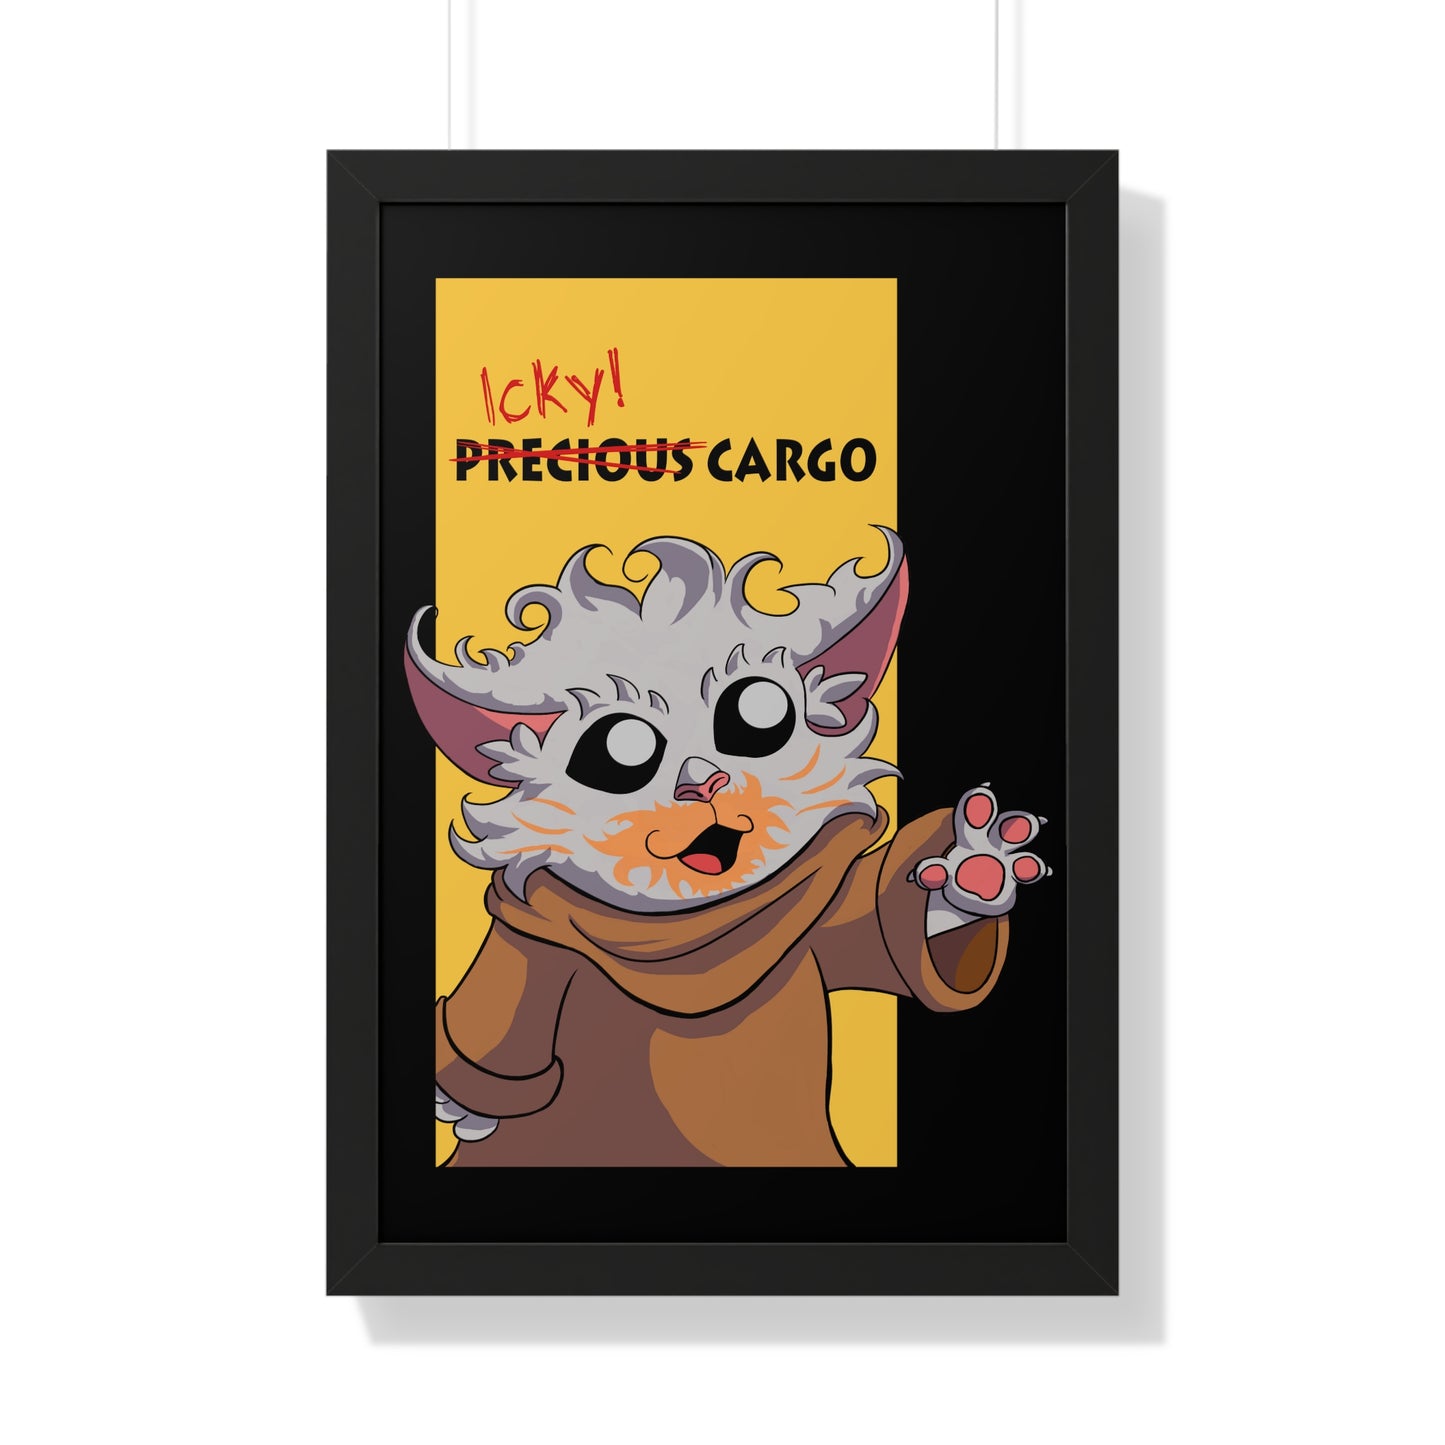 Icky Cargo Framed Poster - Wisp Campaign